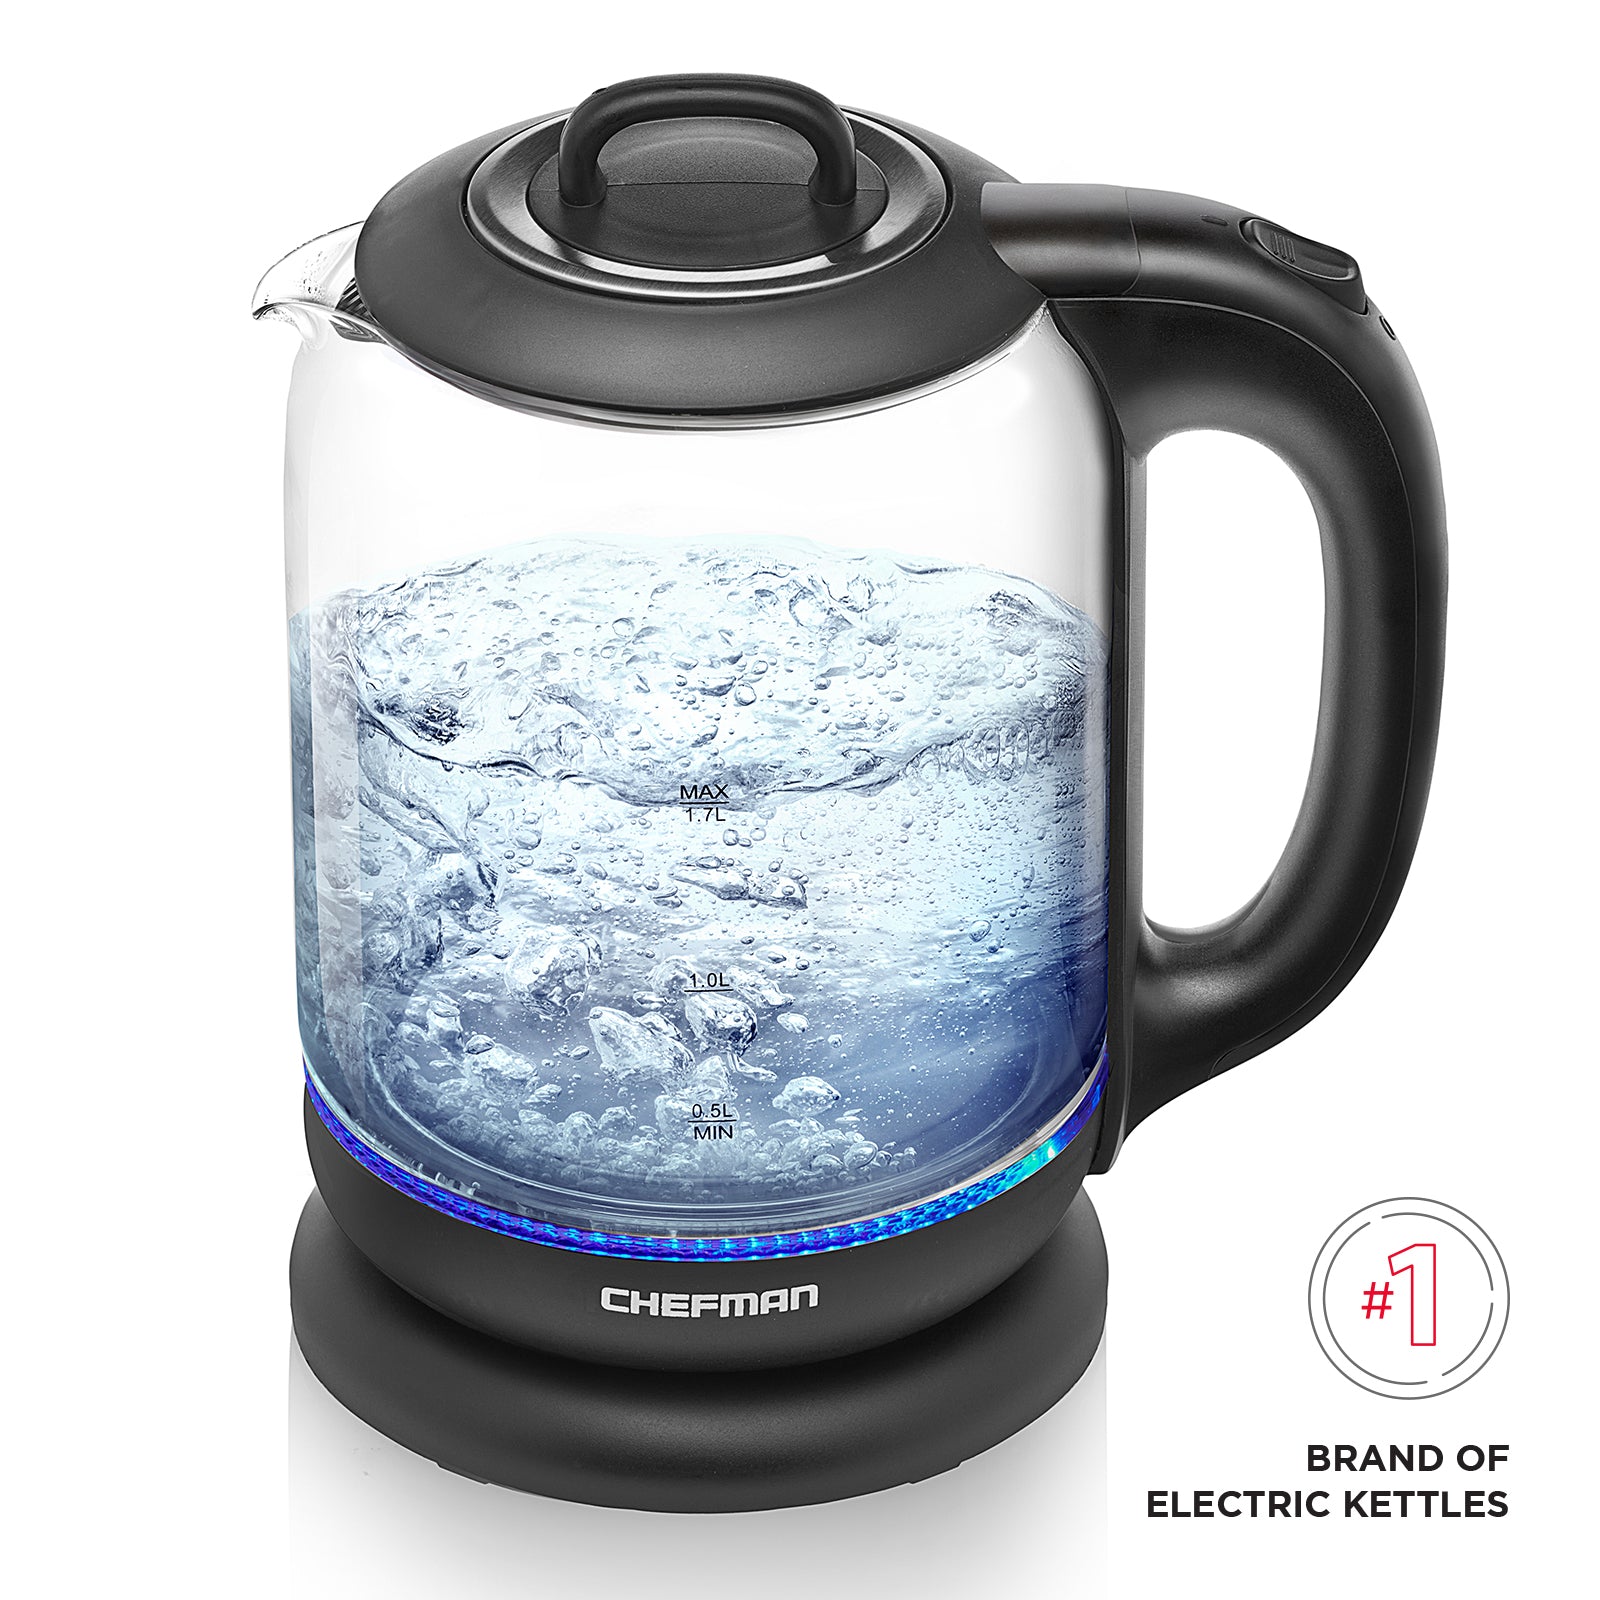 Chefman 1.7 Liter Glass Precision Control Electric Kettle + Tea Infuser